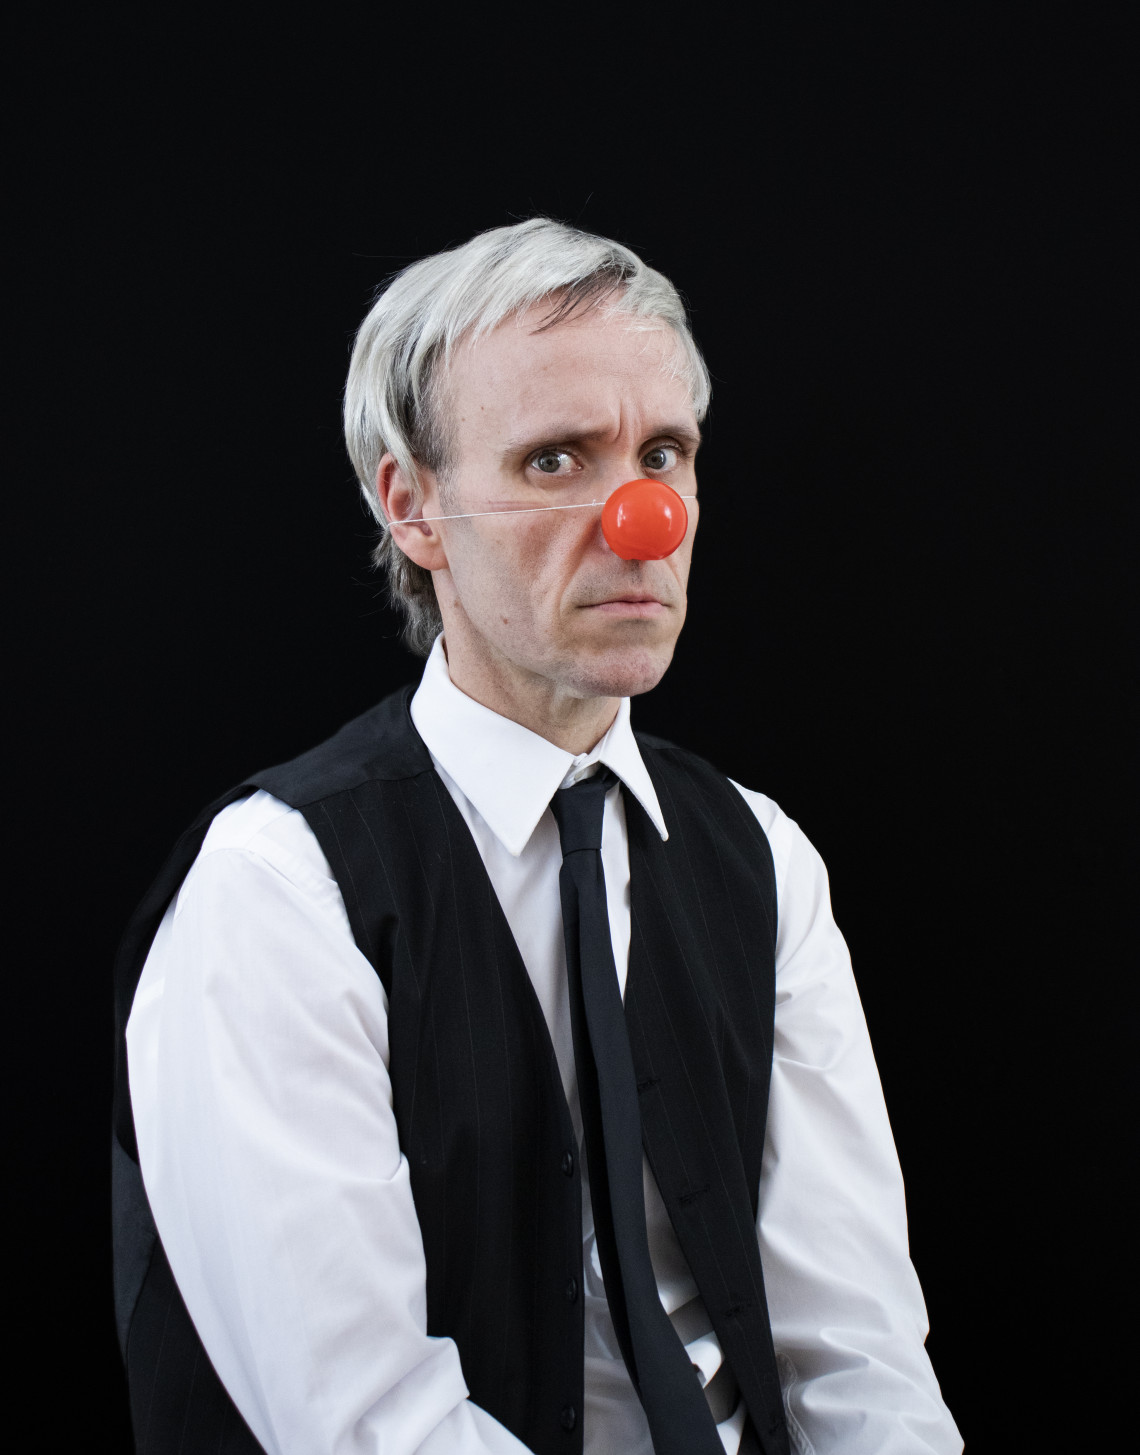  - Steve Giasson as Andy Warhol as a Clown